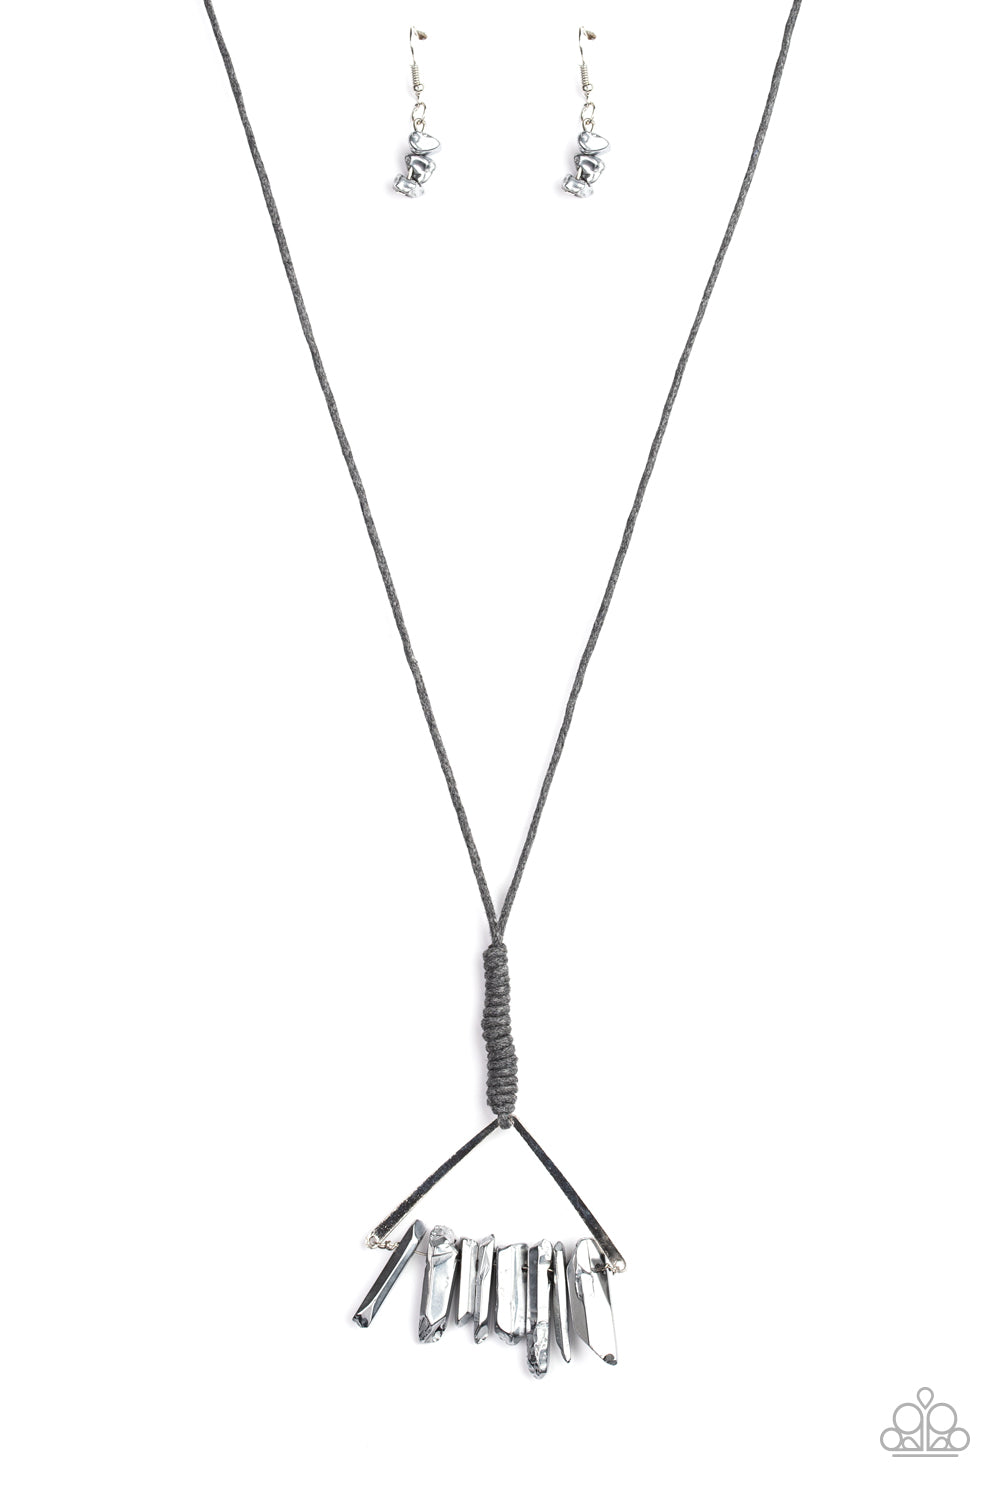 Raw Talent - Silver (Hematite) Necklace freeshipping - JewLz4u Gemstone Gallery